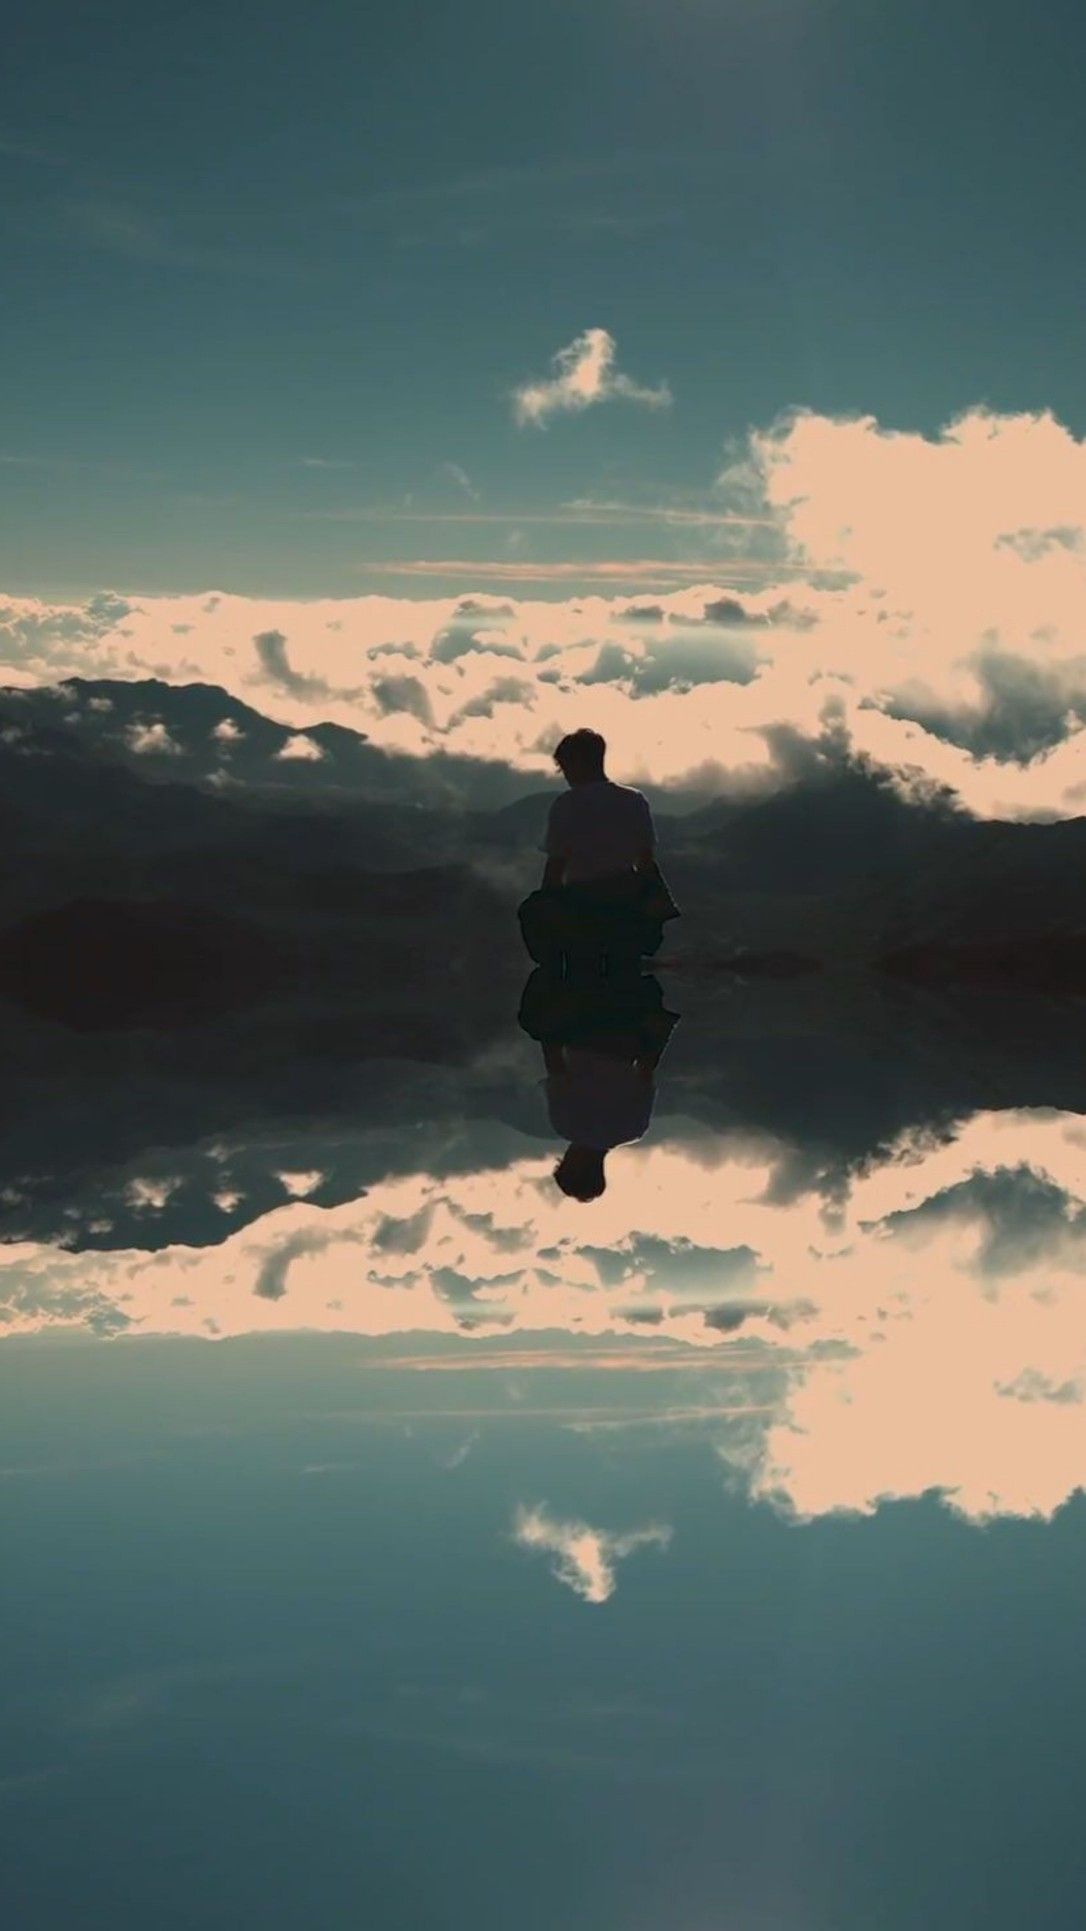 kpop live wallpaper,sky,nature,cloud,water,reflection